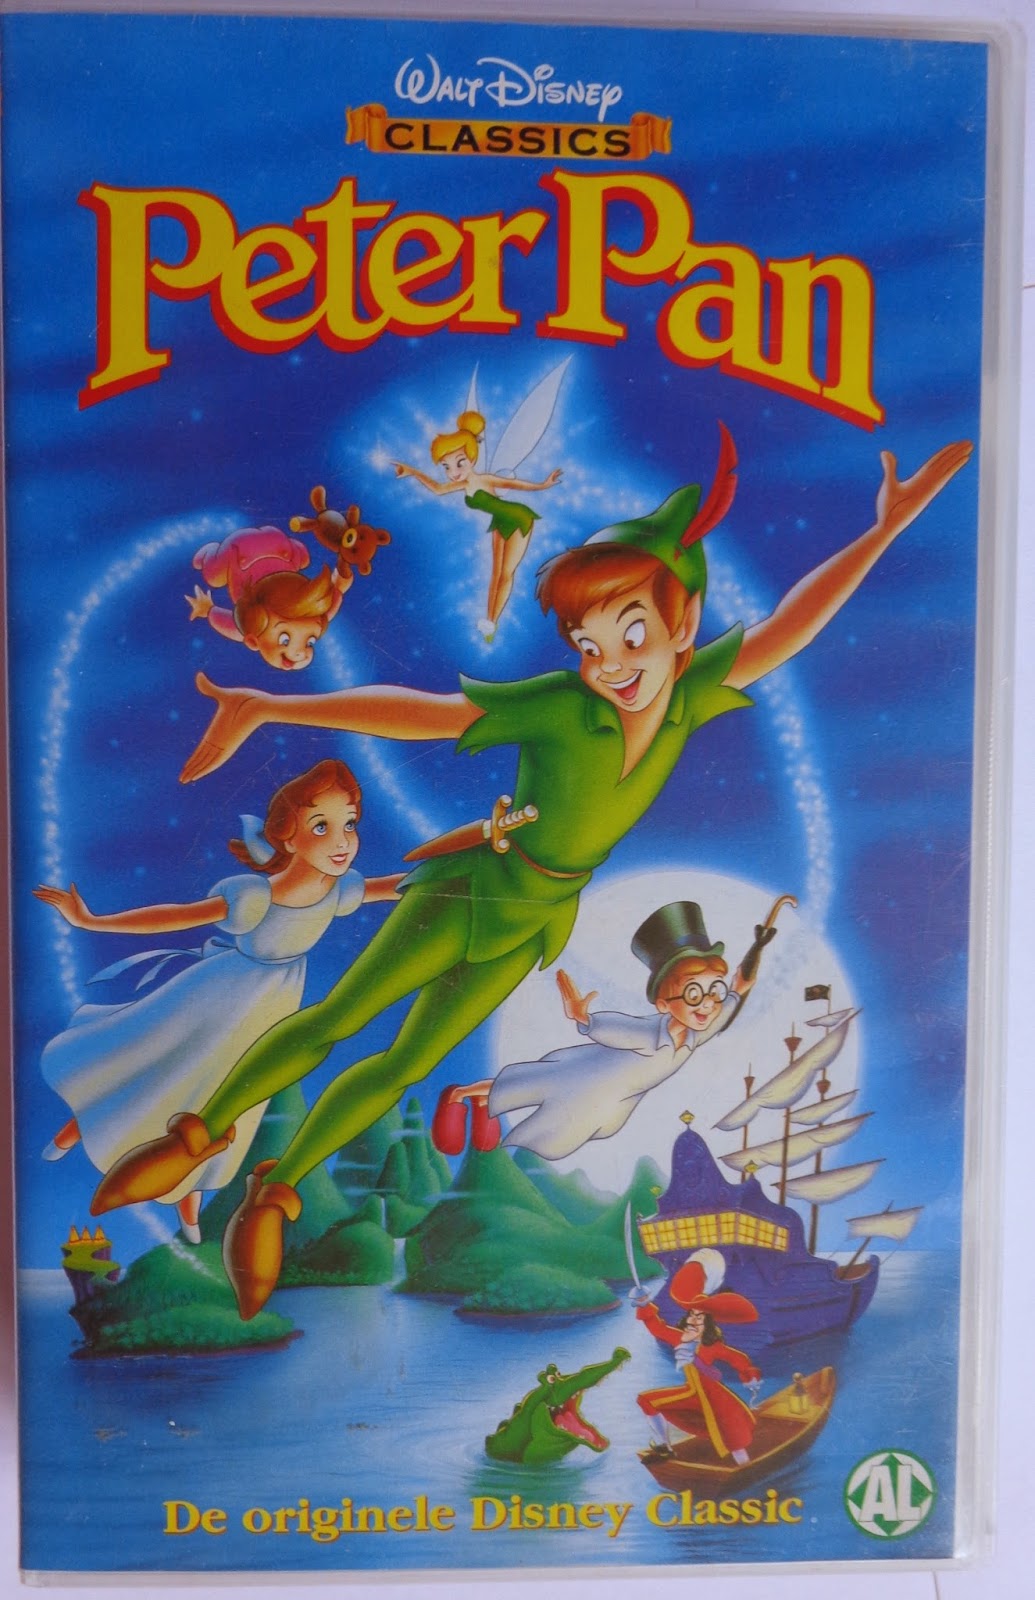 All My Disney: MDC: VHS-tape Peter Pan, Dutch